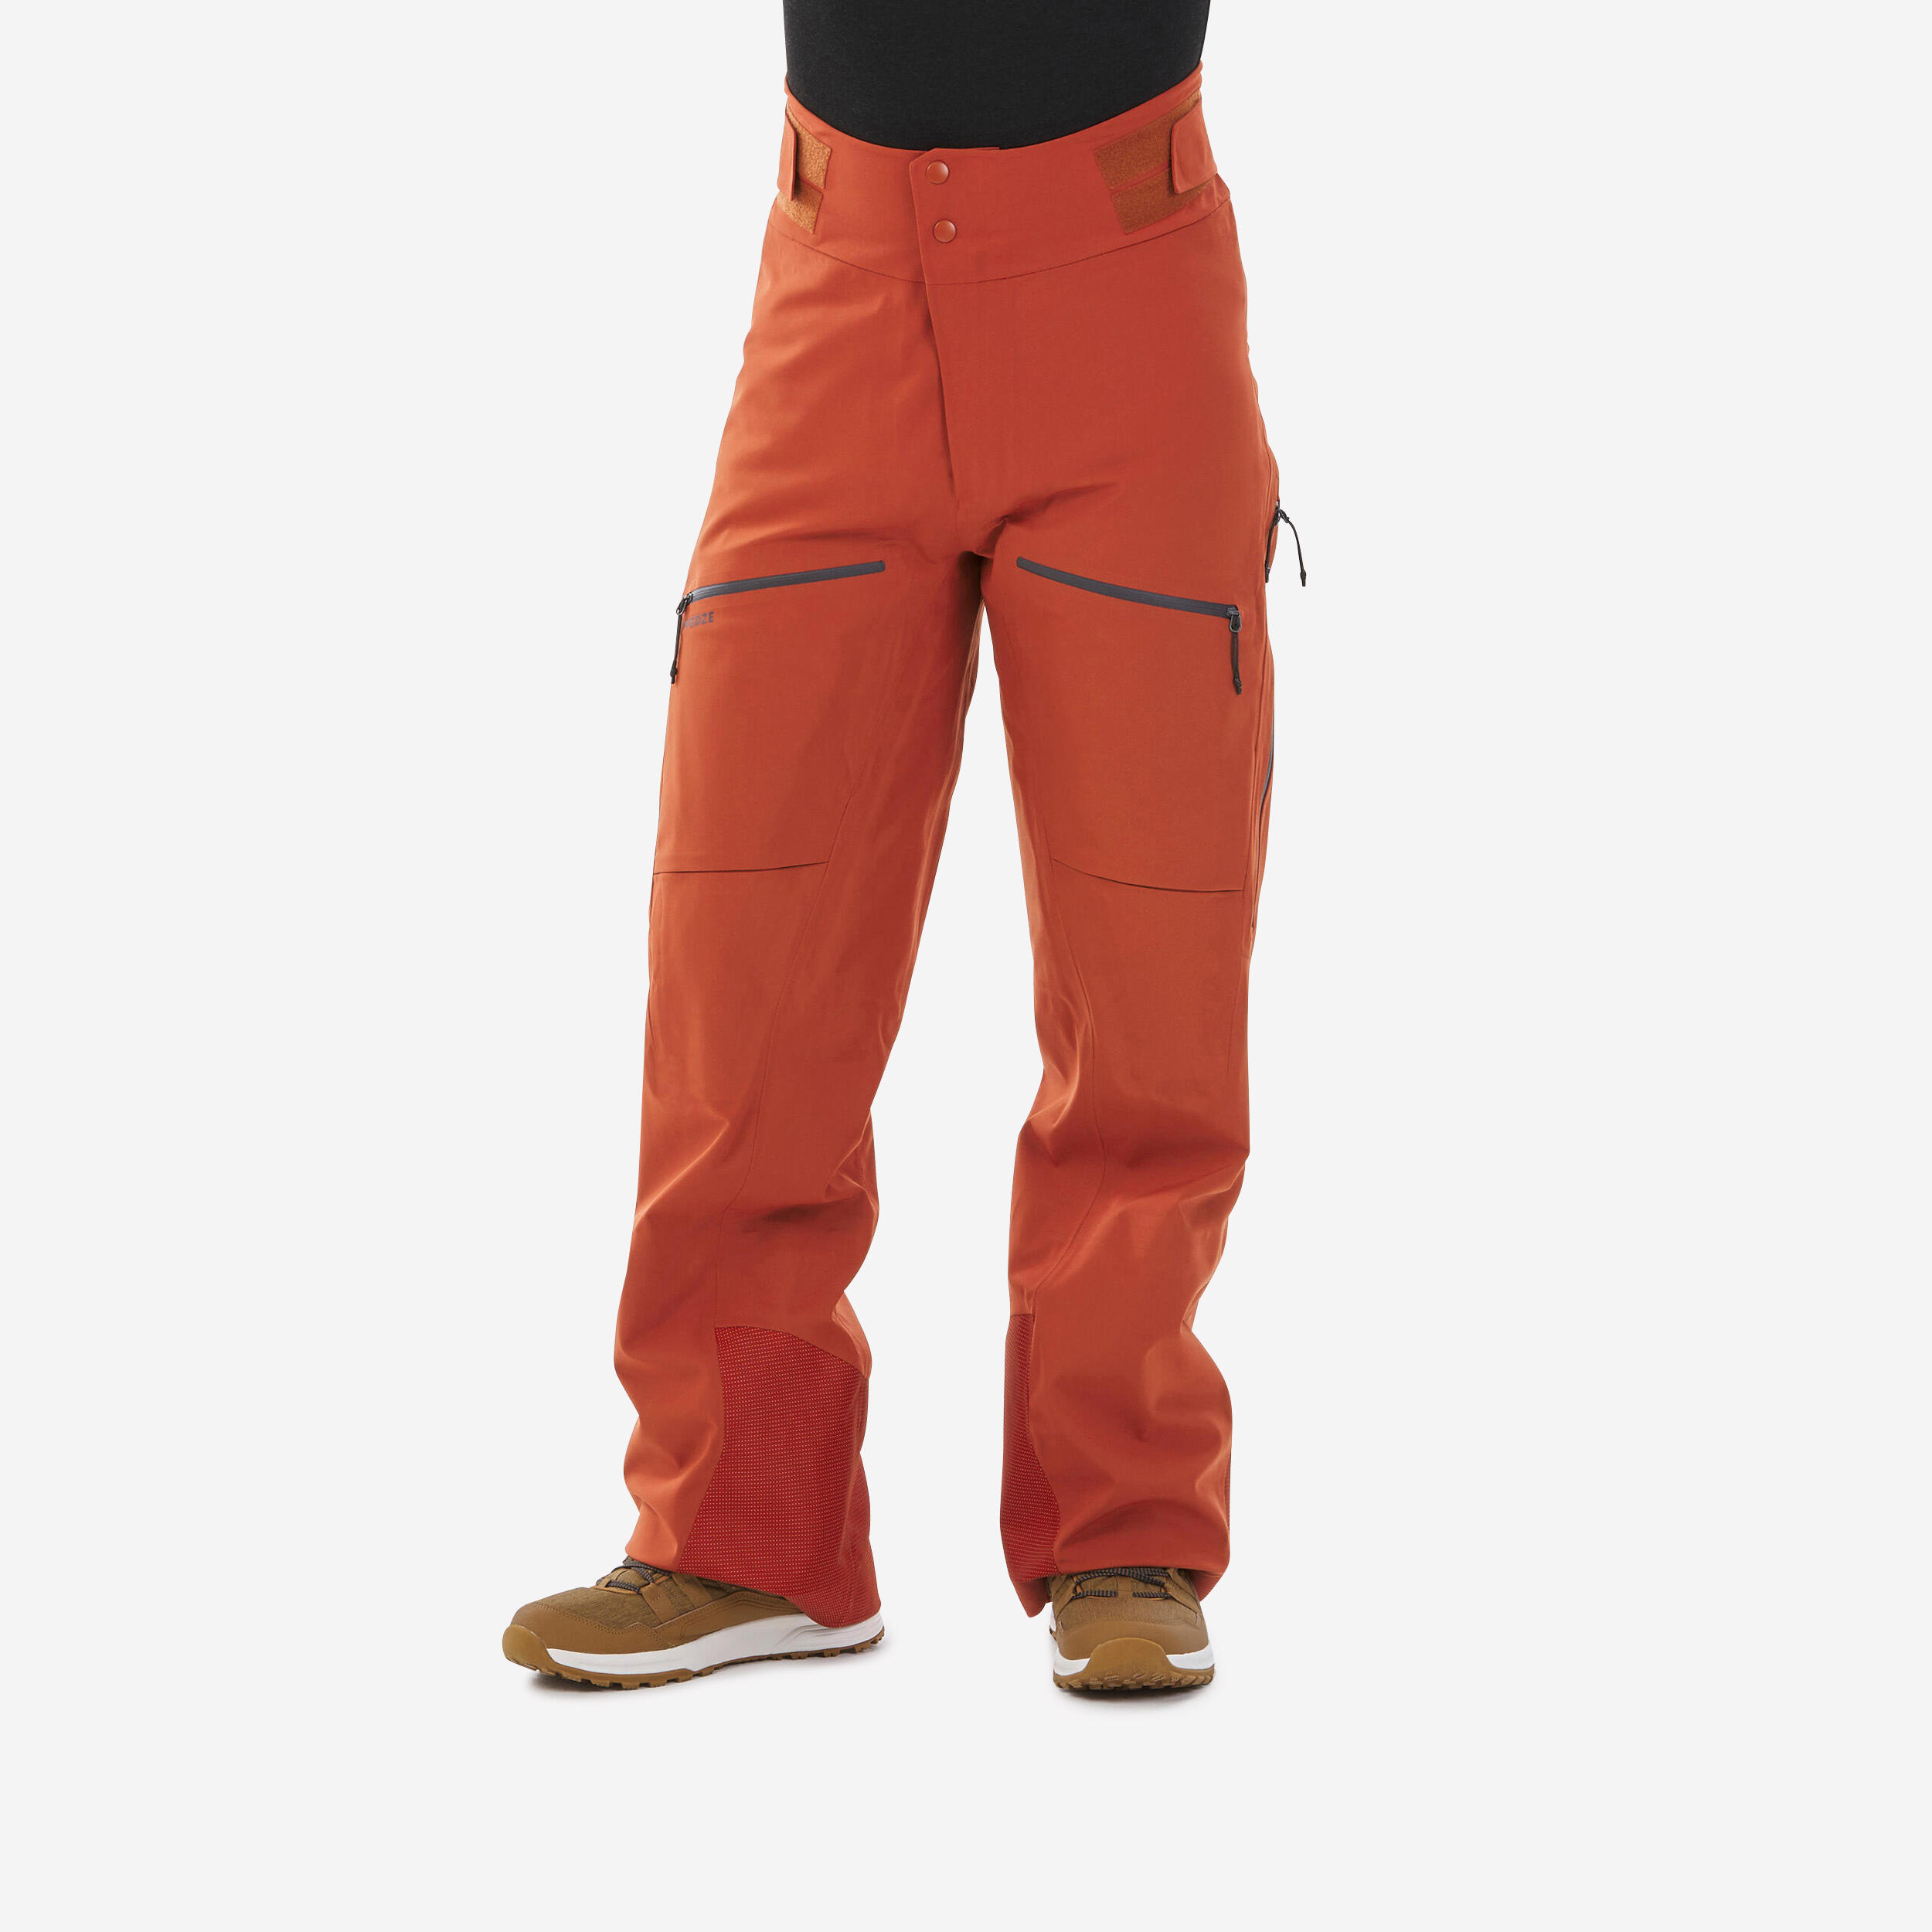 Image of Men’s Winter Pants - FR 500 Orange